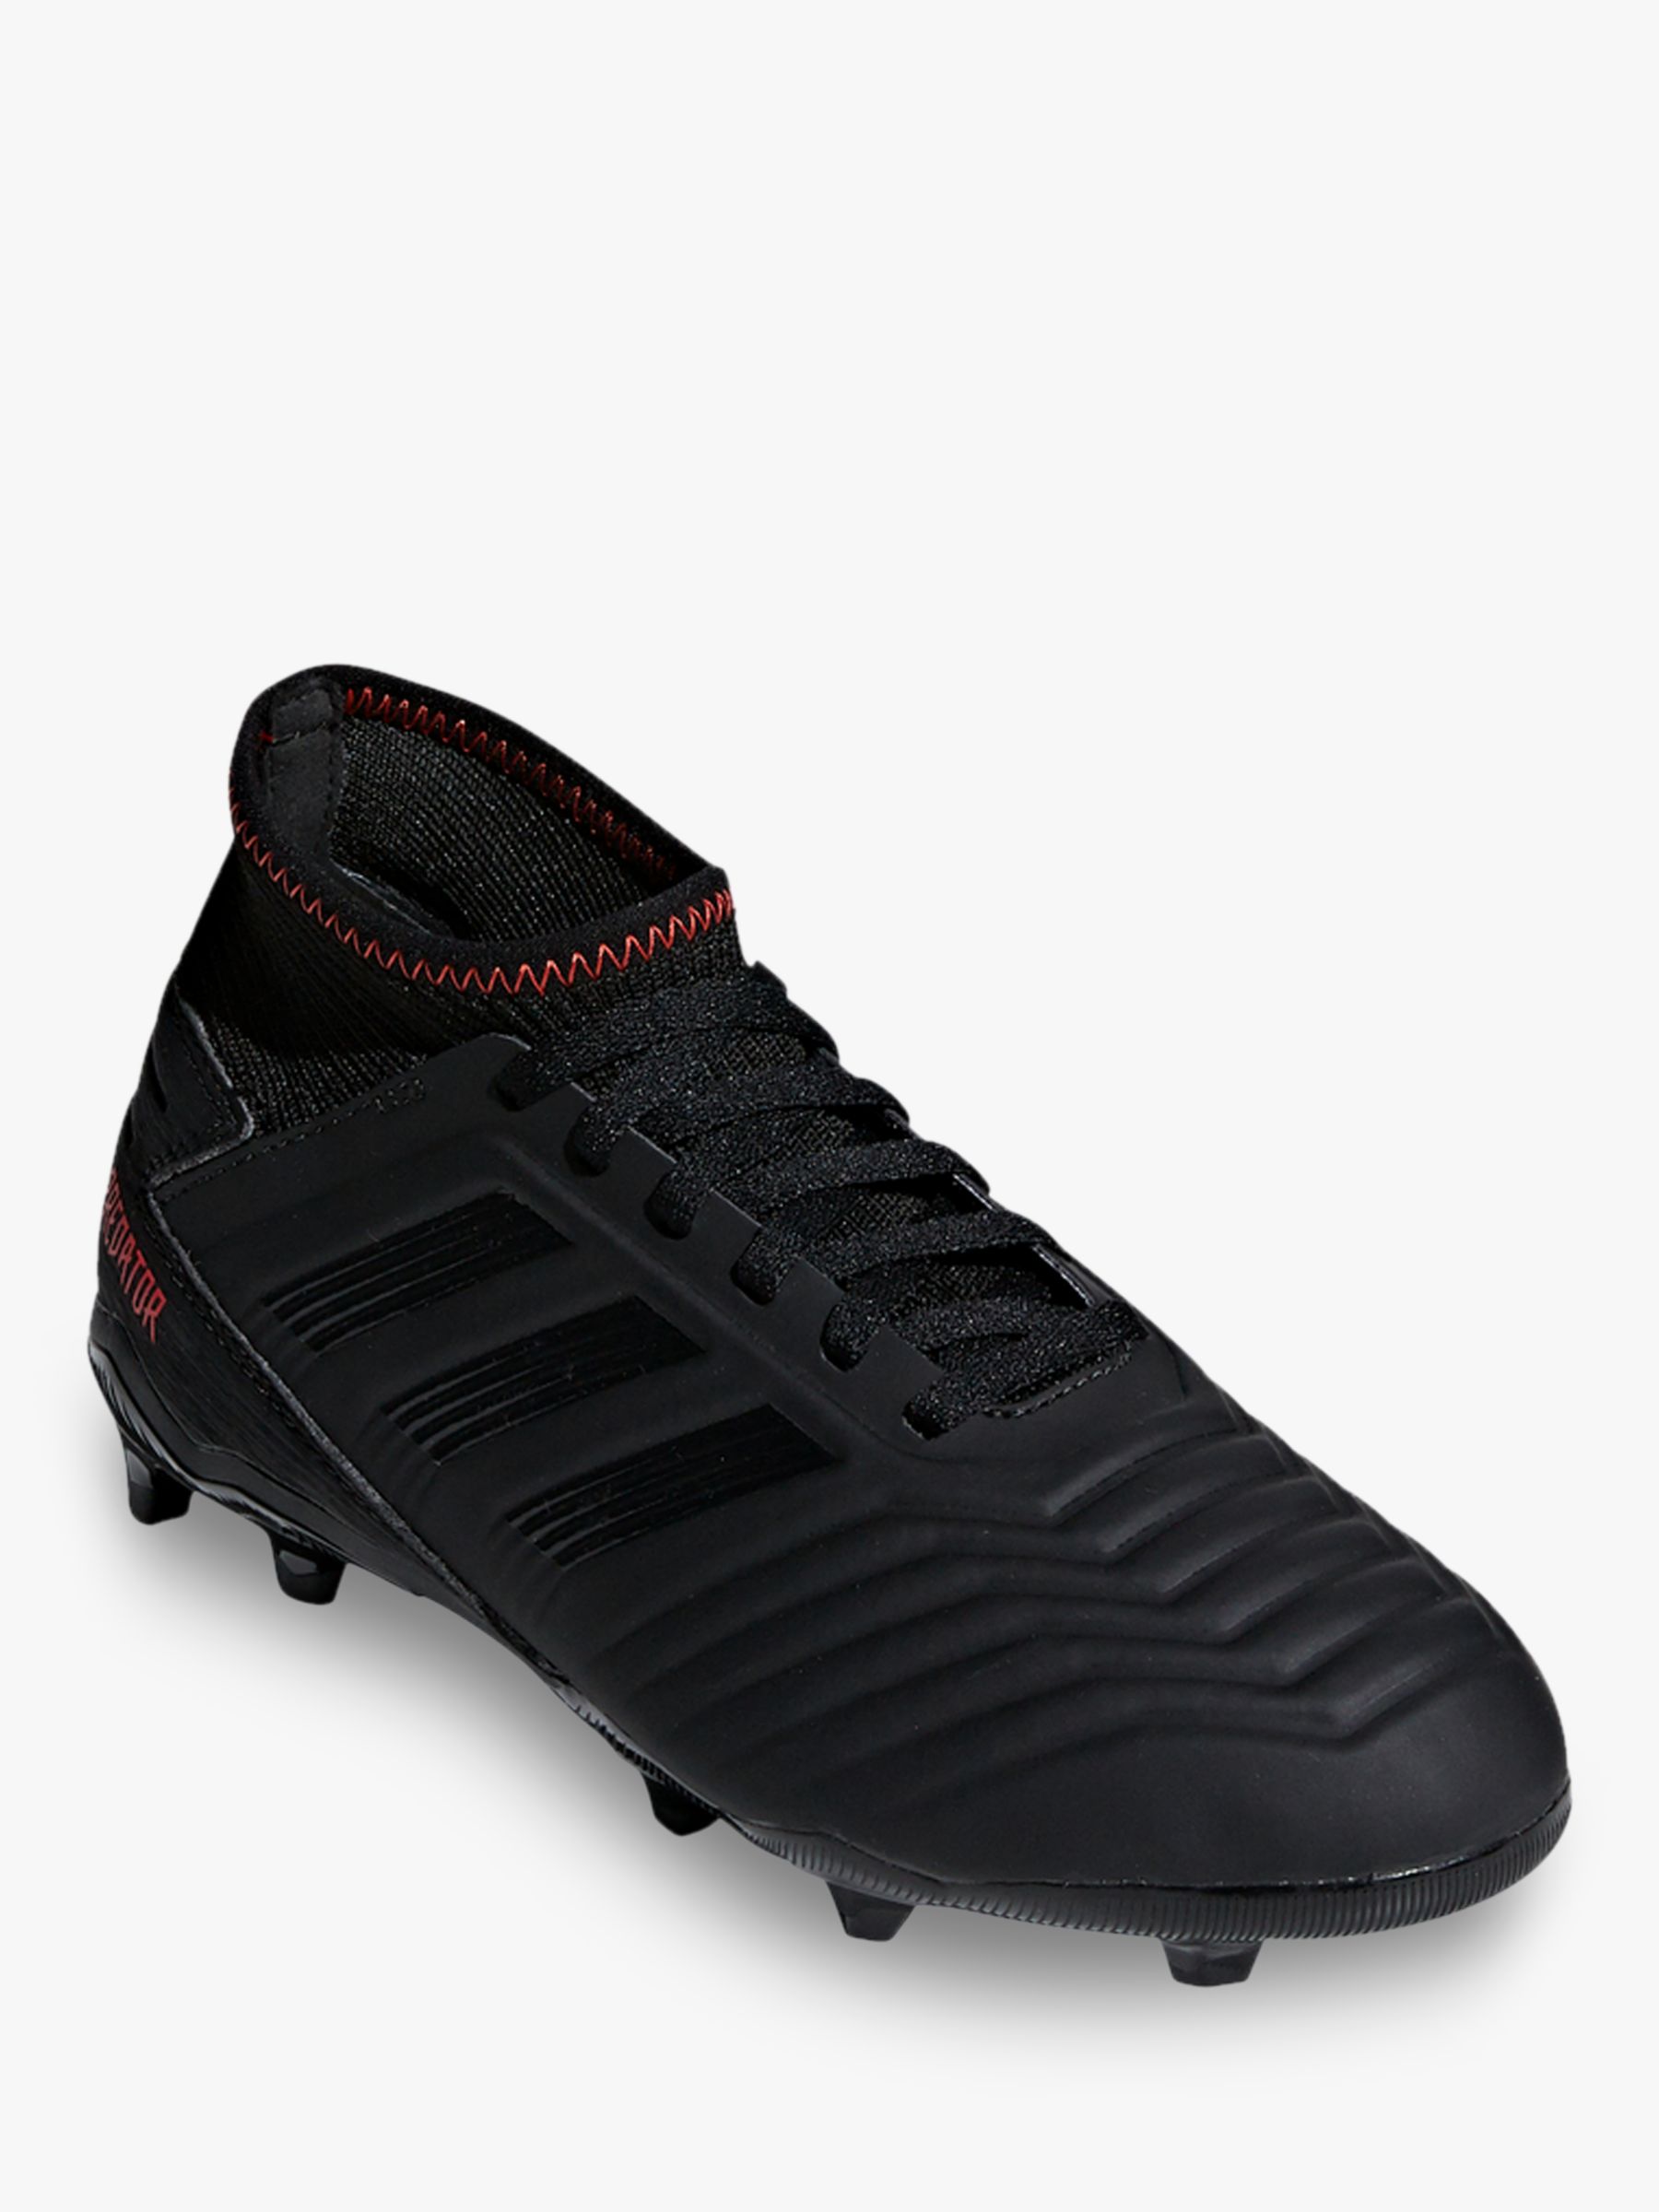 predator football boots black